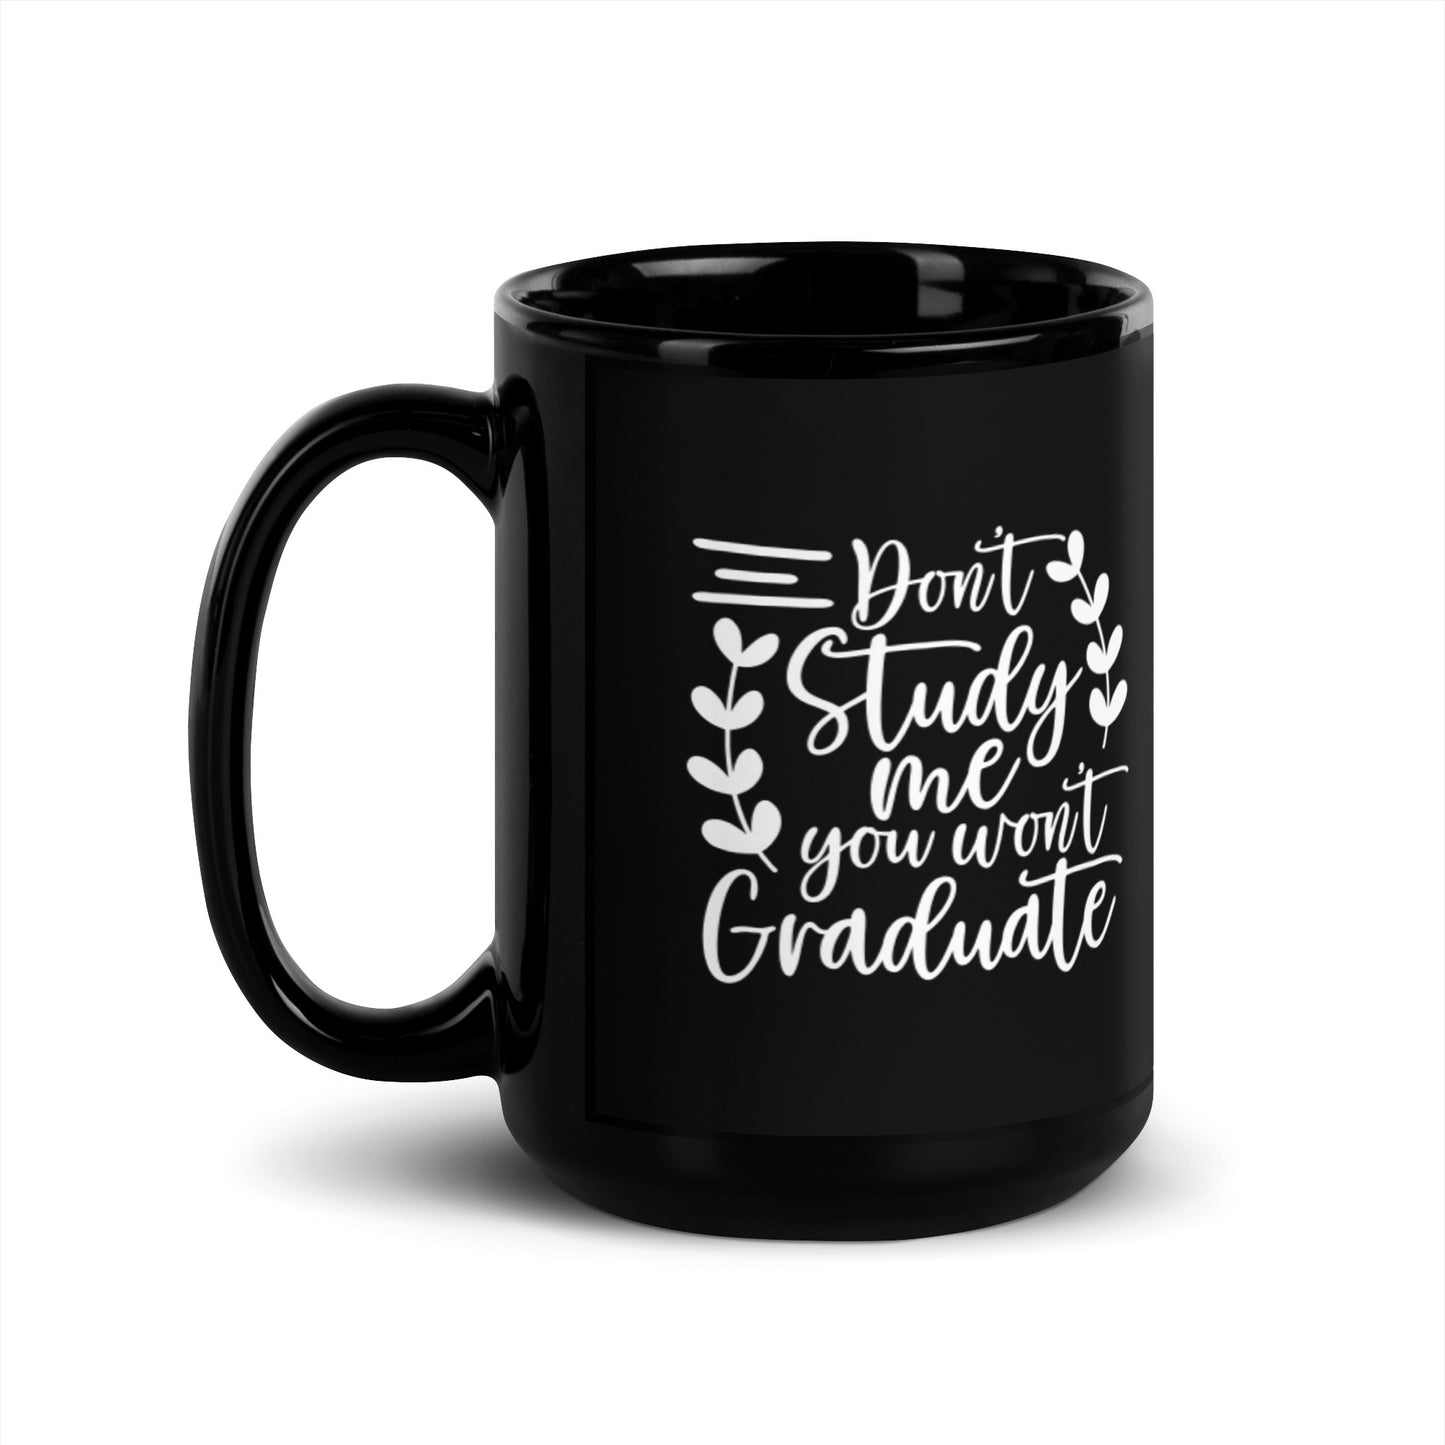 Don't Study Me You Won't Graduate Black Glossy Mug